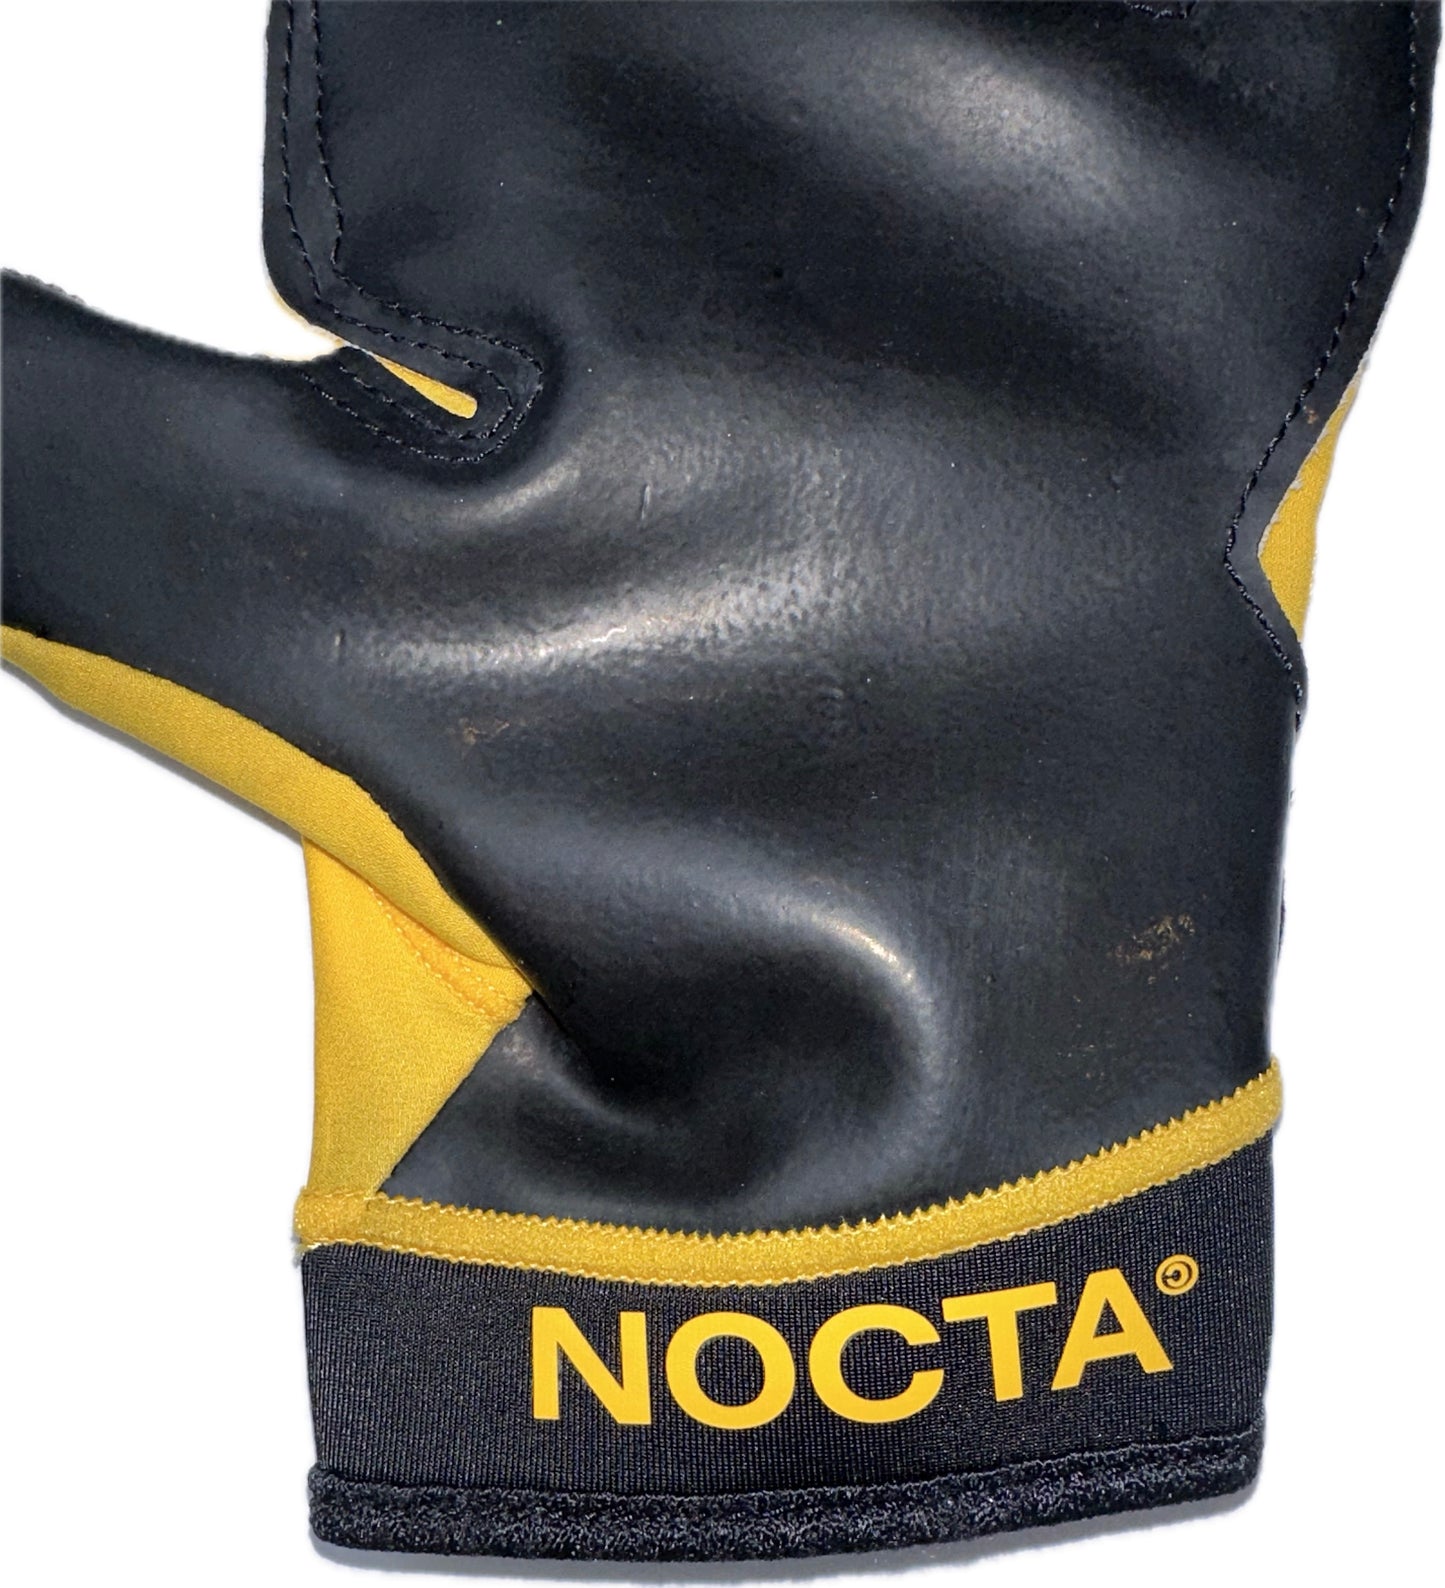 Unreleased NOCTA Gloves